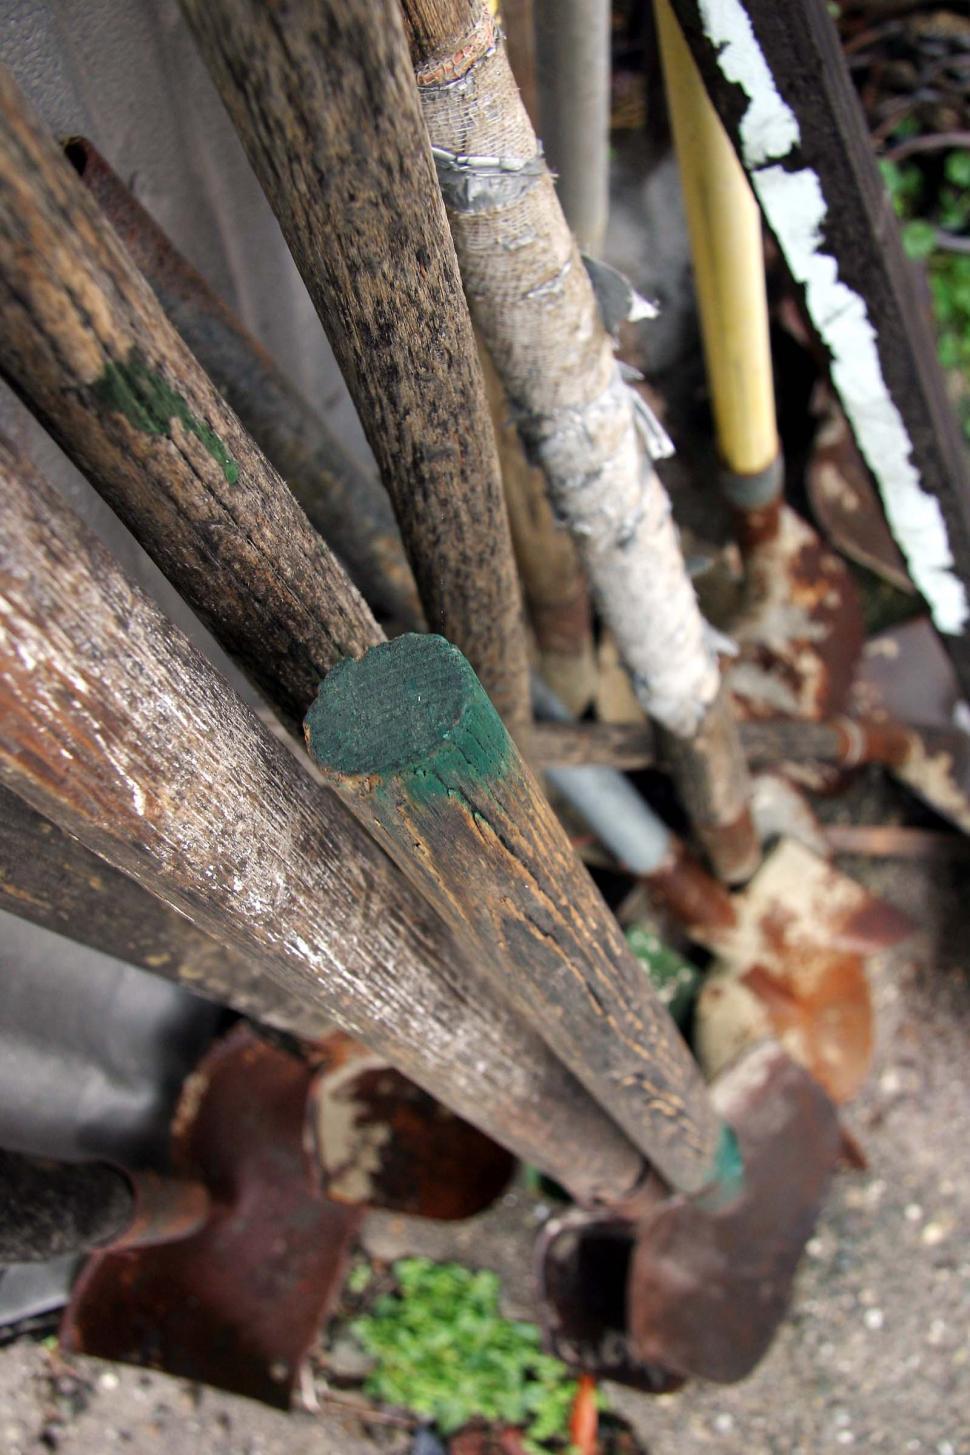 Free Image of shovels tools yard garden work spades handles stack worn used 